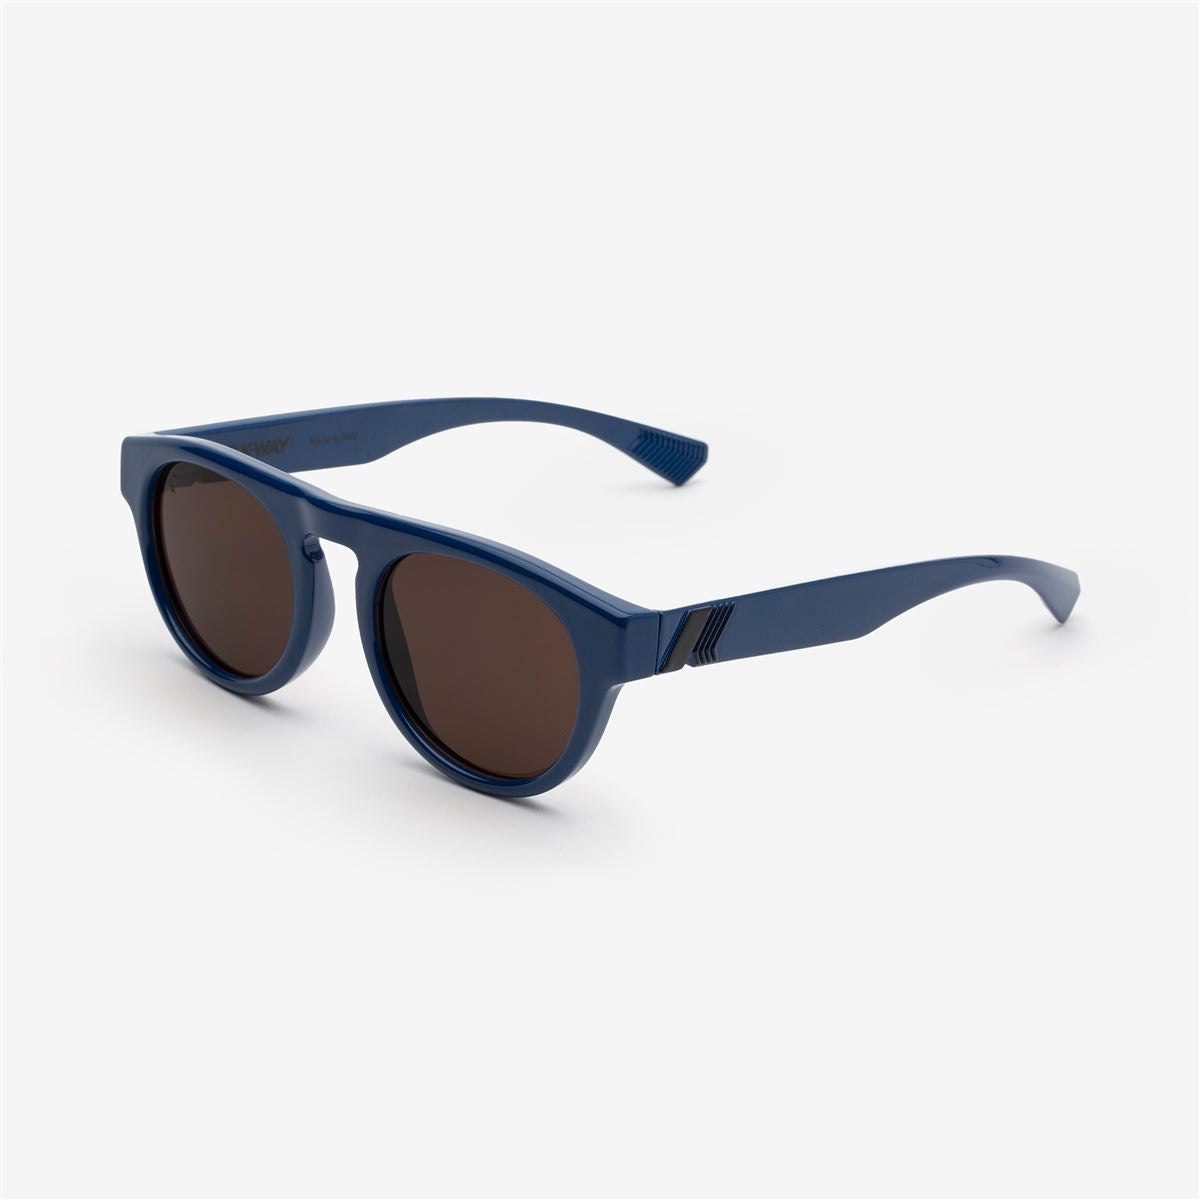 PILOTE - Glasses - Sunglasses - Unisex - Blue